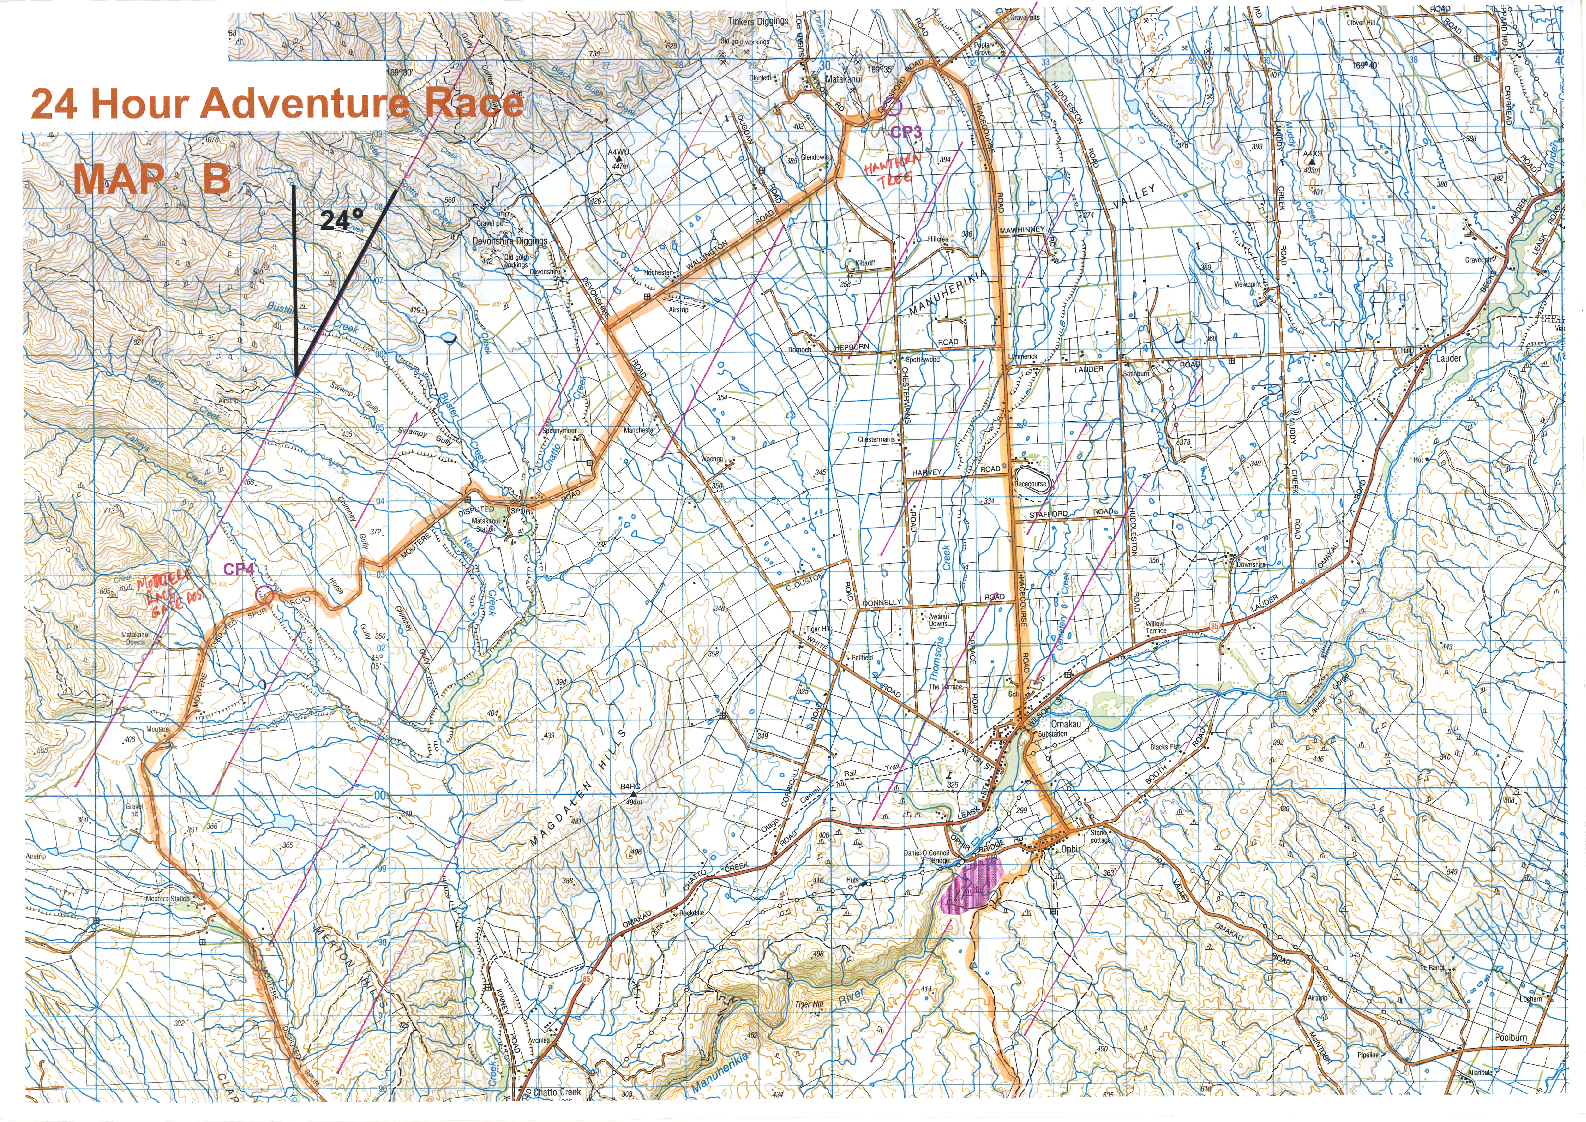 SLMC 24hr Adventure Race Map B (17-11-2017)